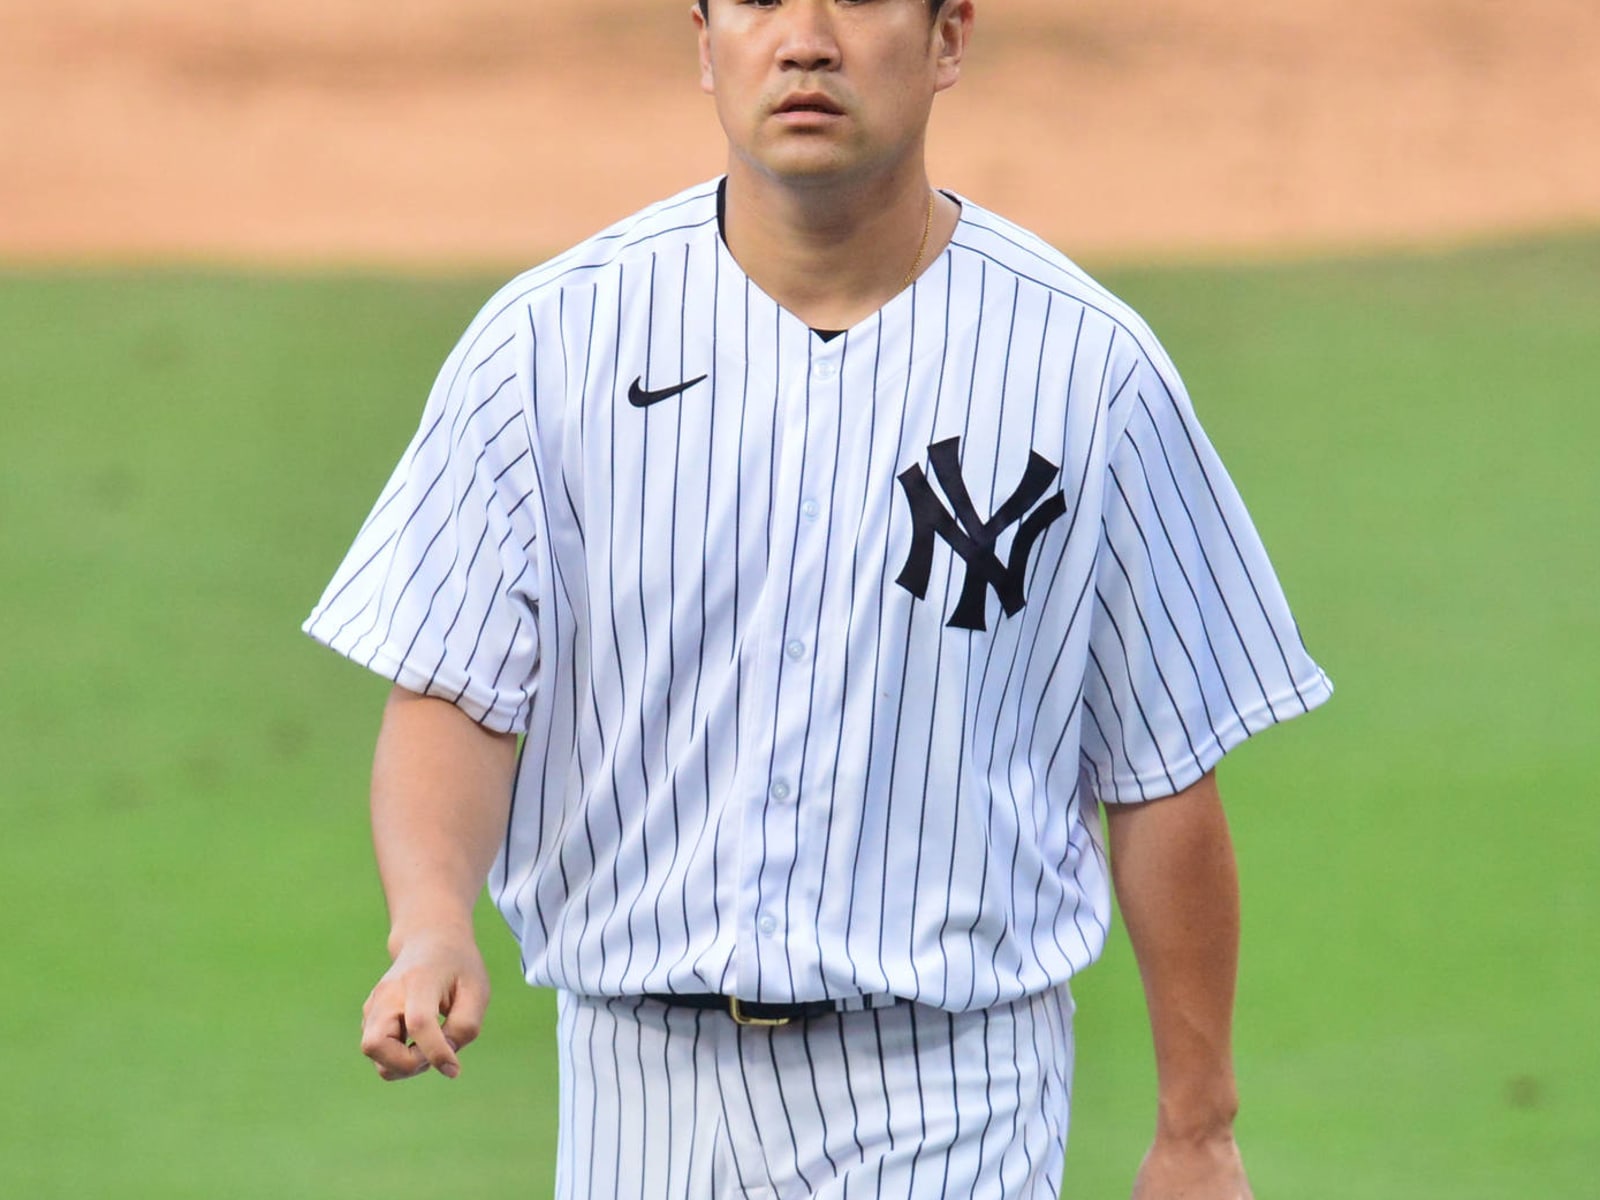 Masahiro Tanaka, Yu Darvish dazzle in first MLB duel; Yankees win